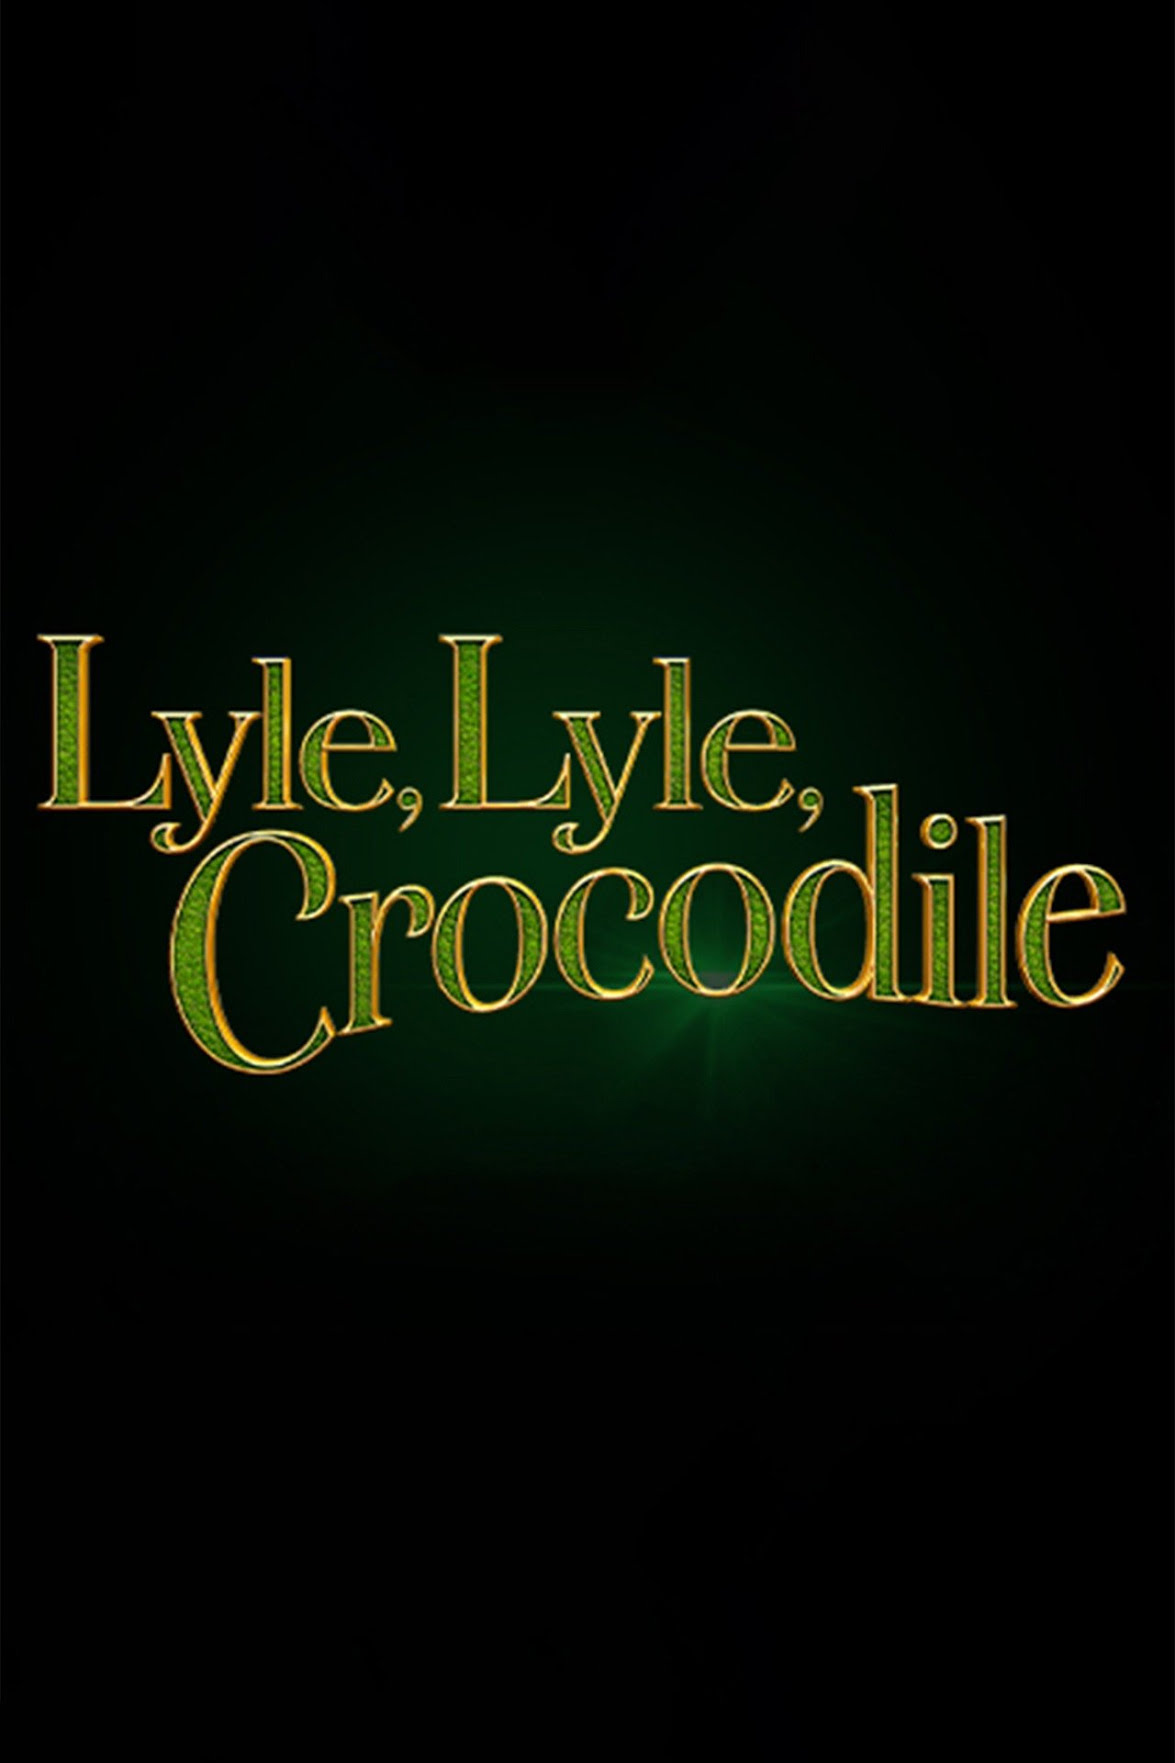 Image of Movie cover Lyle, Lyle Crocodile.